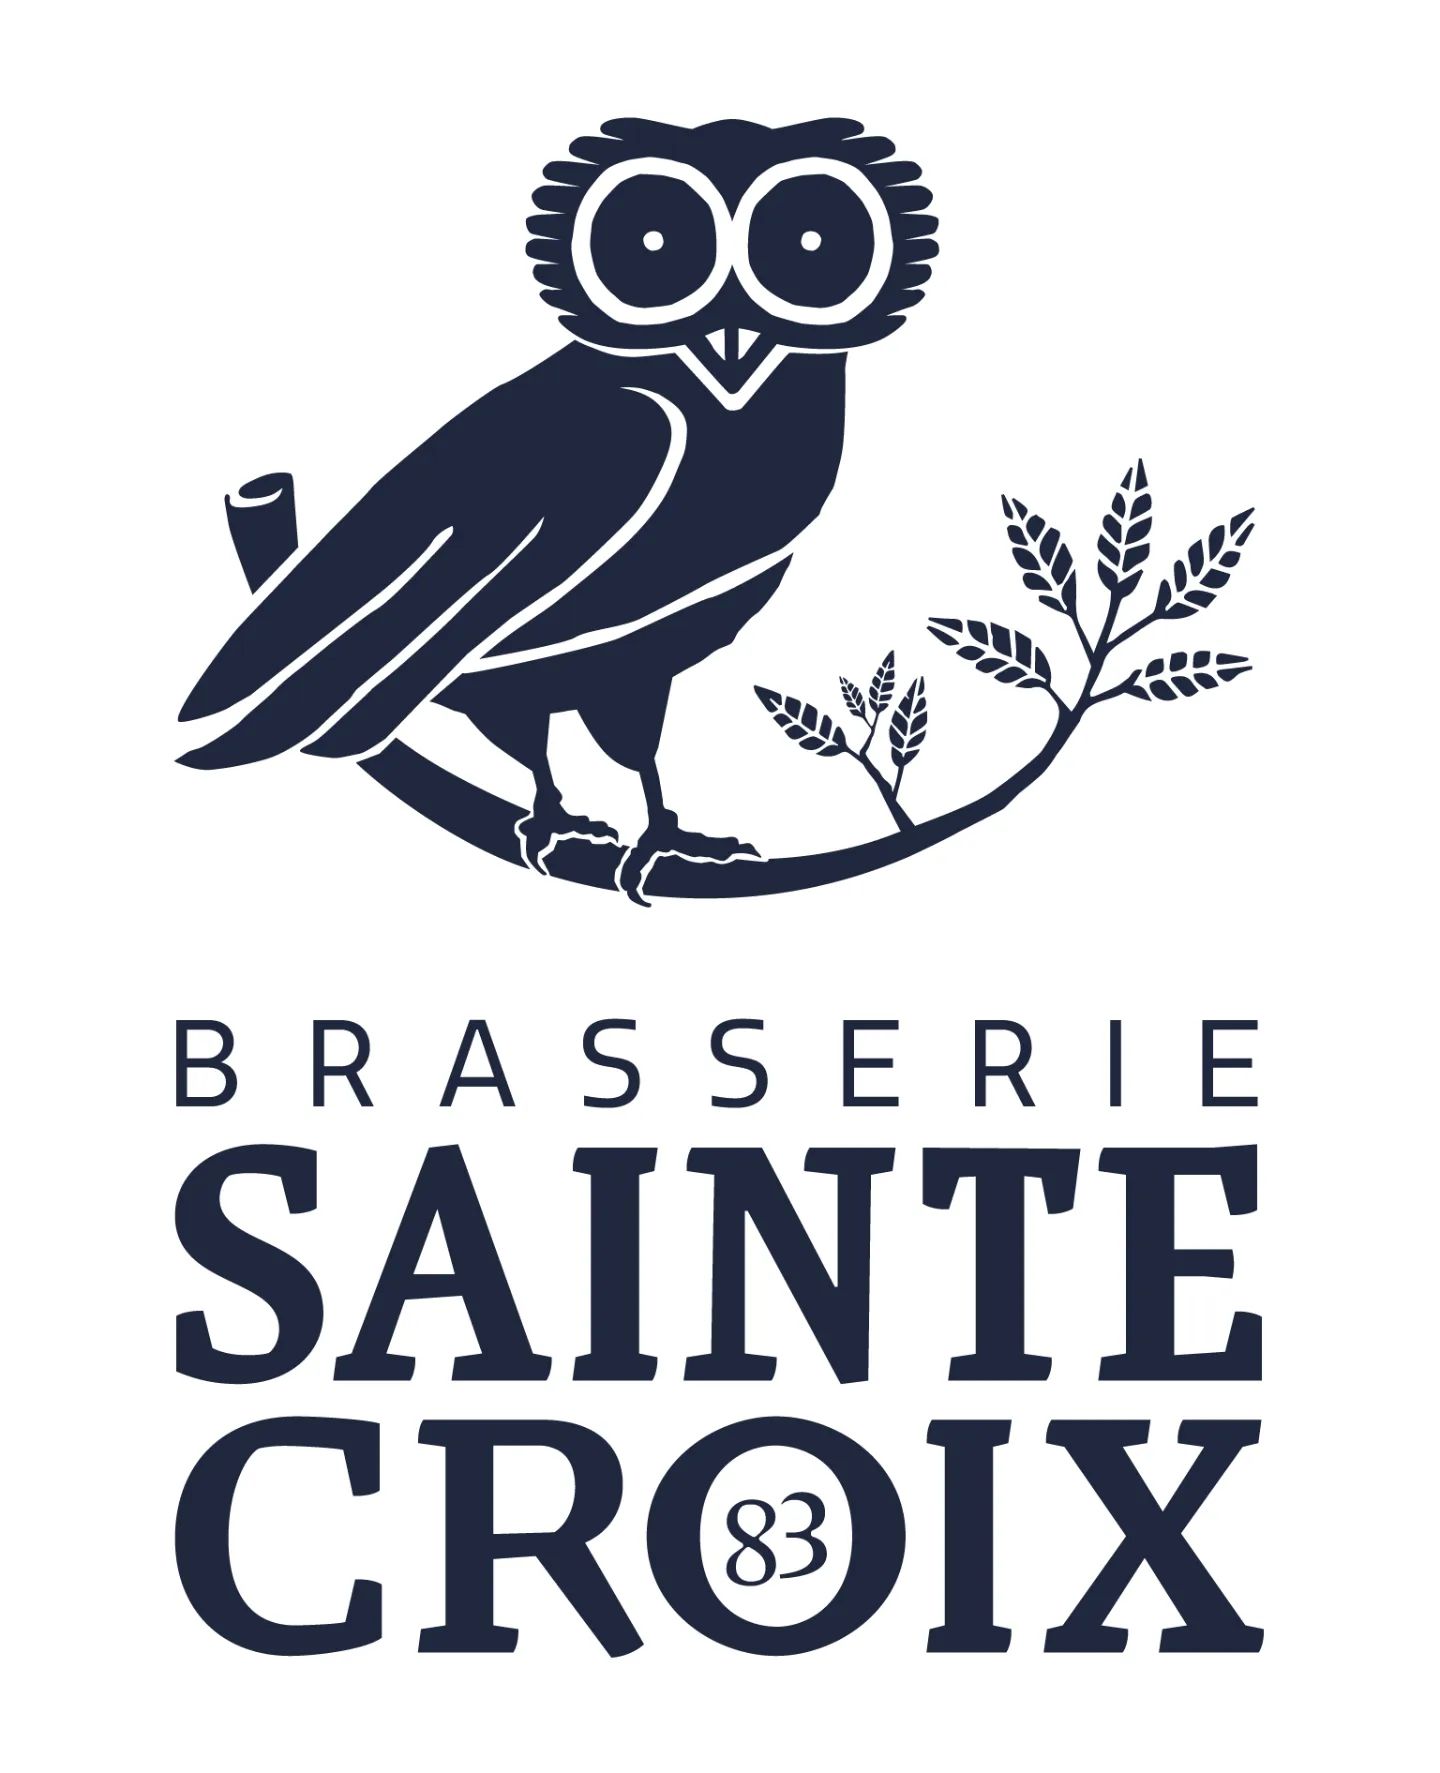 Brasserie Sainte Croix 83